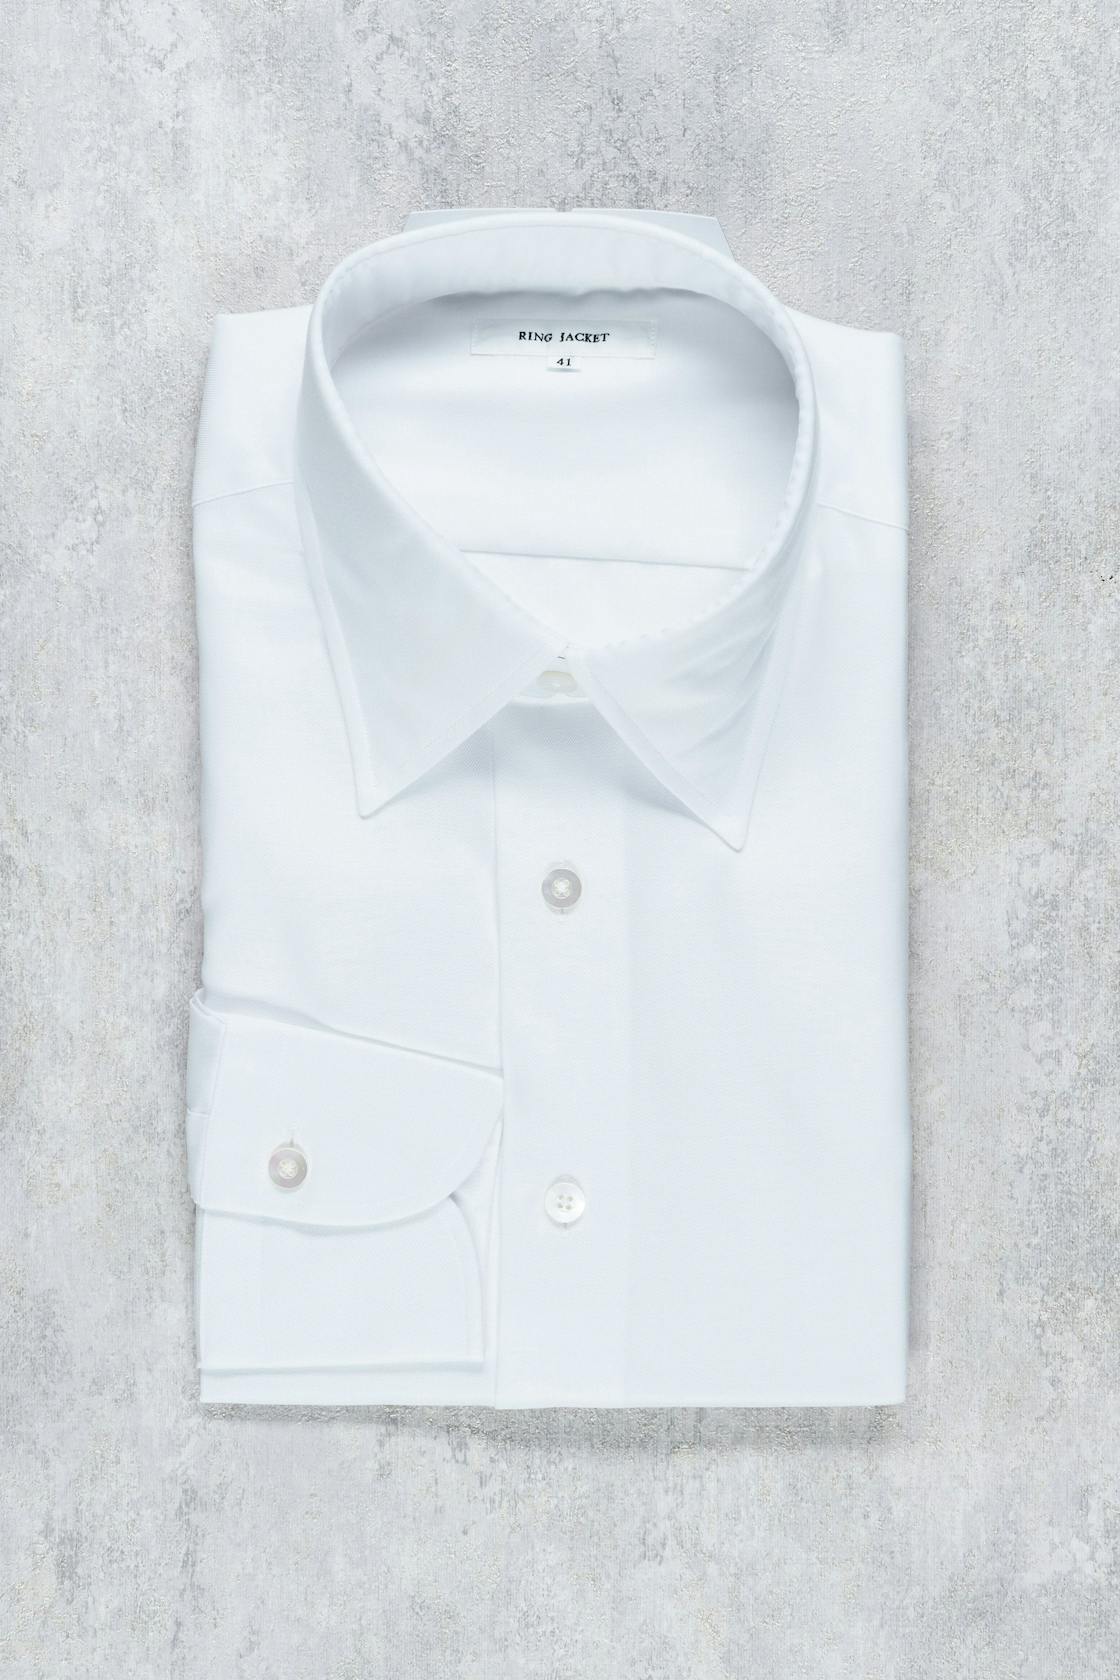 Ring Jacket RBKS-11 White Cotton Twill Spread Collar Shirt